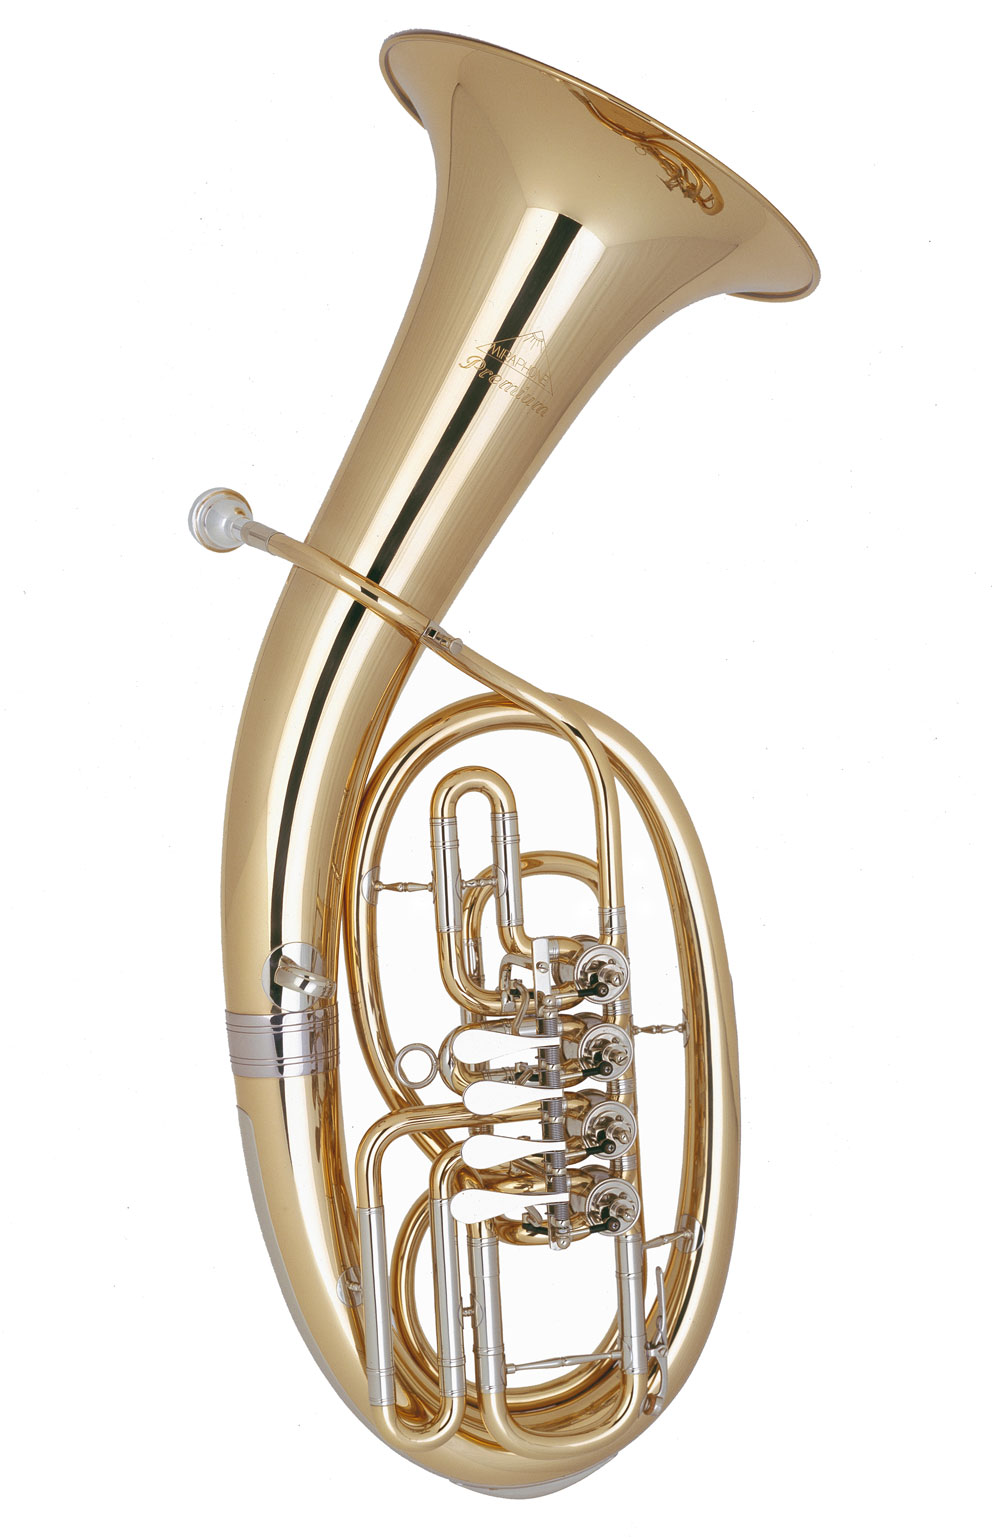 Miraphone Bb tenor horn 47WL4 11000